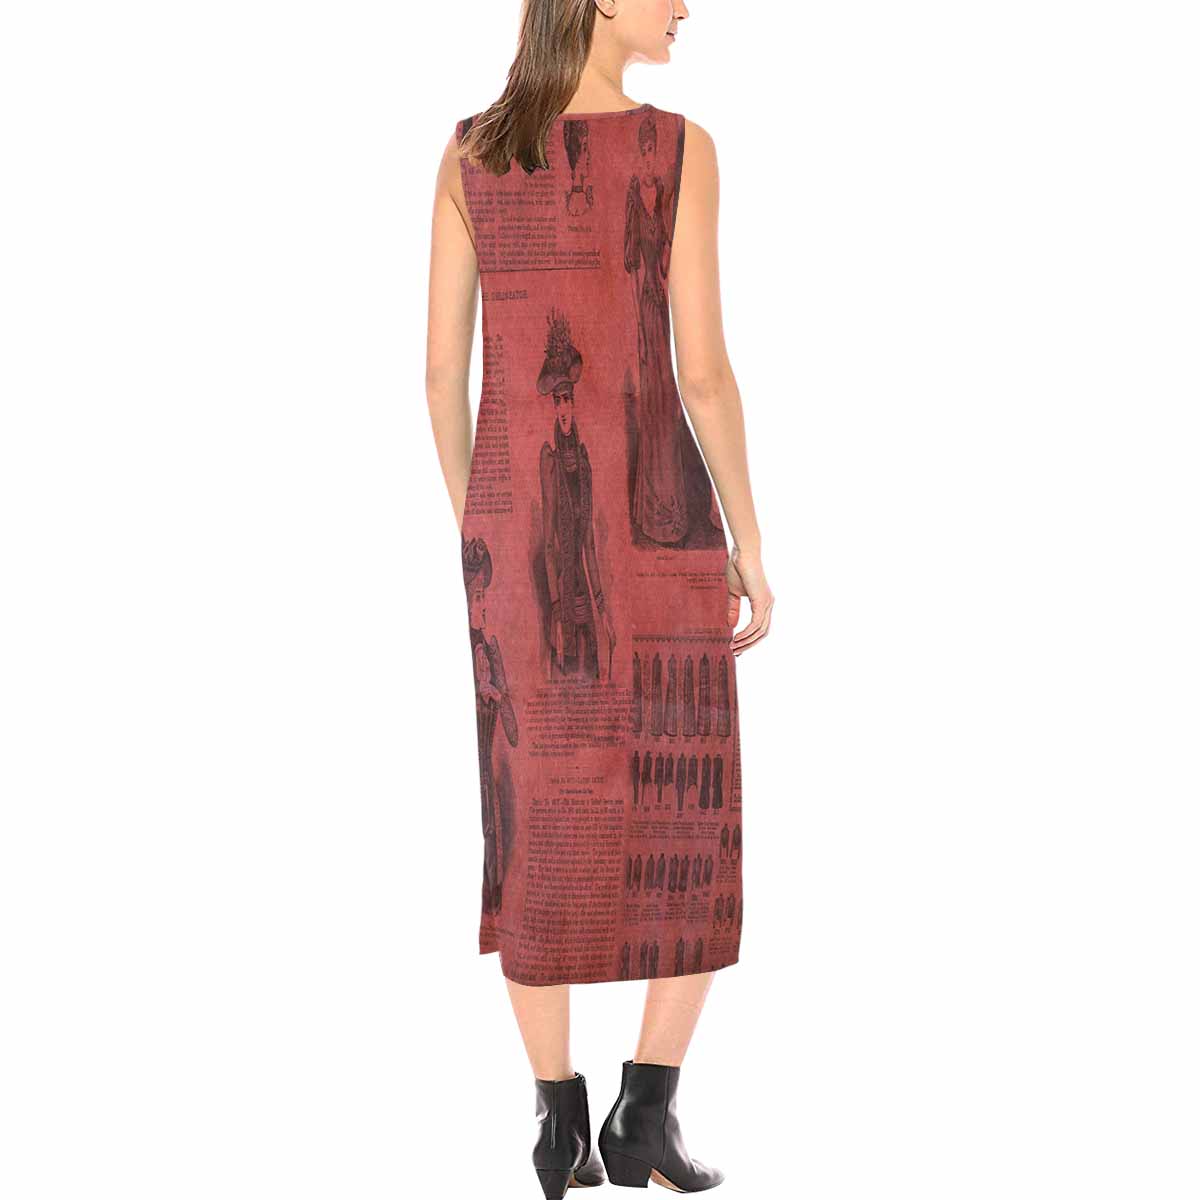 Antique General long chic dress, MODEL 09538, design 37